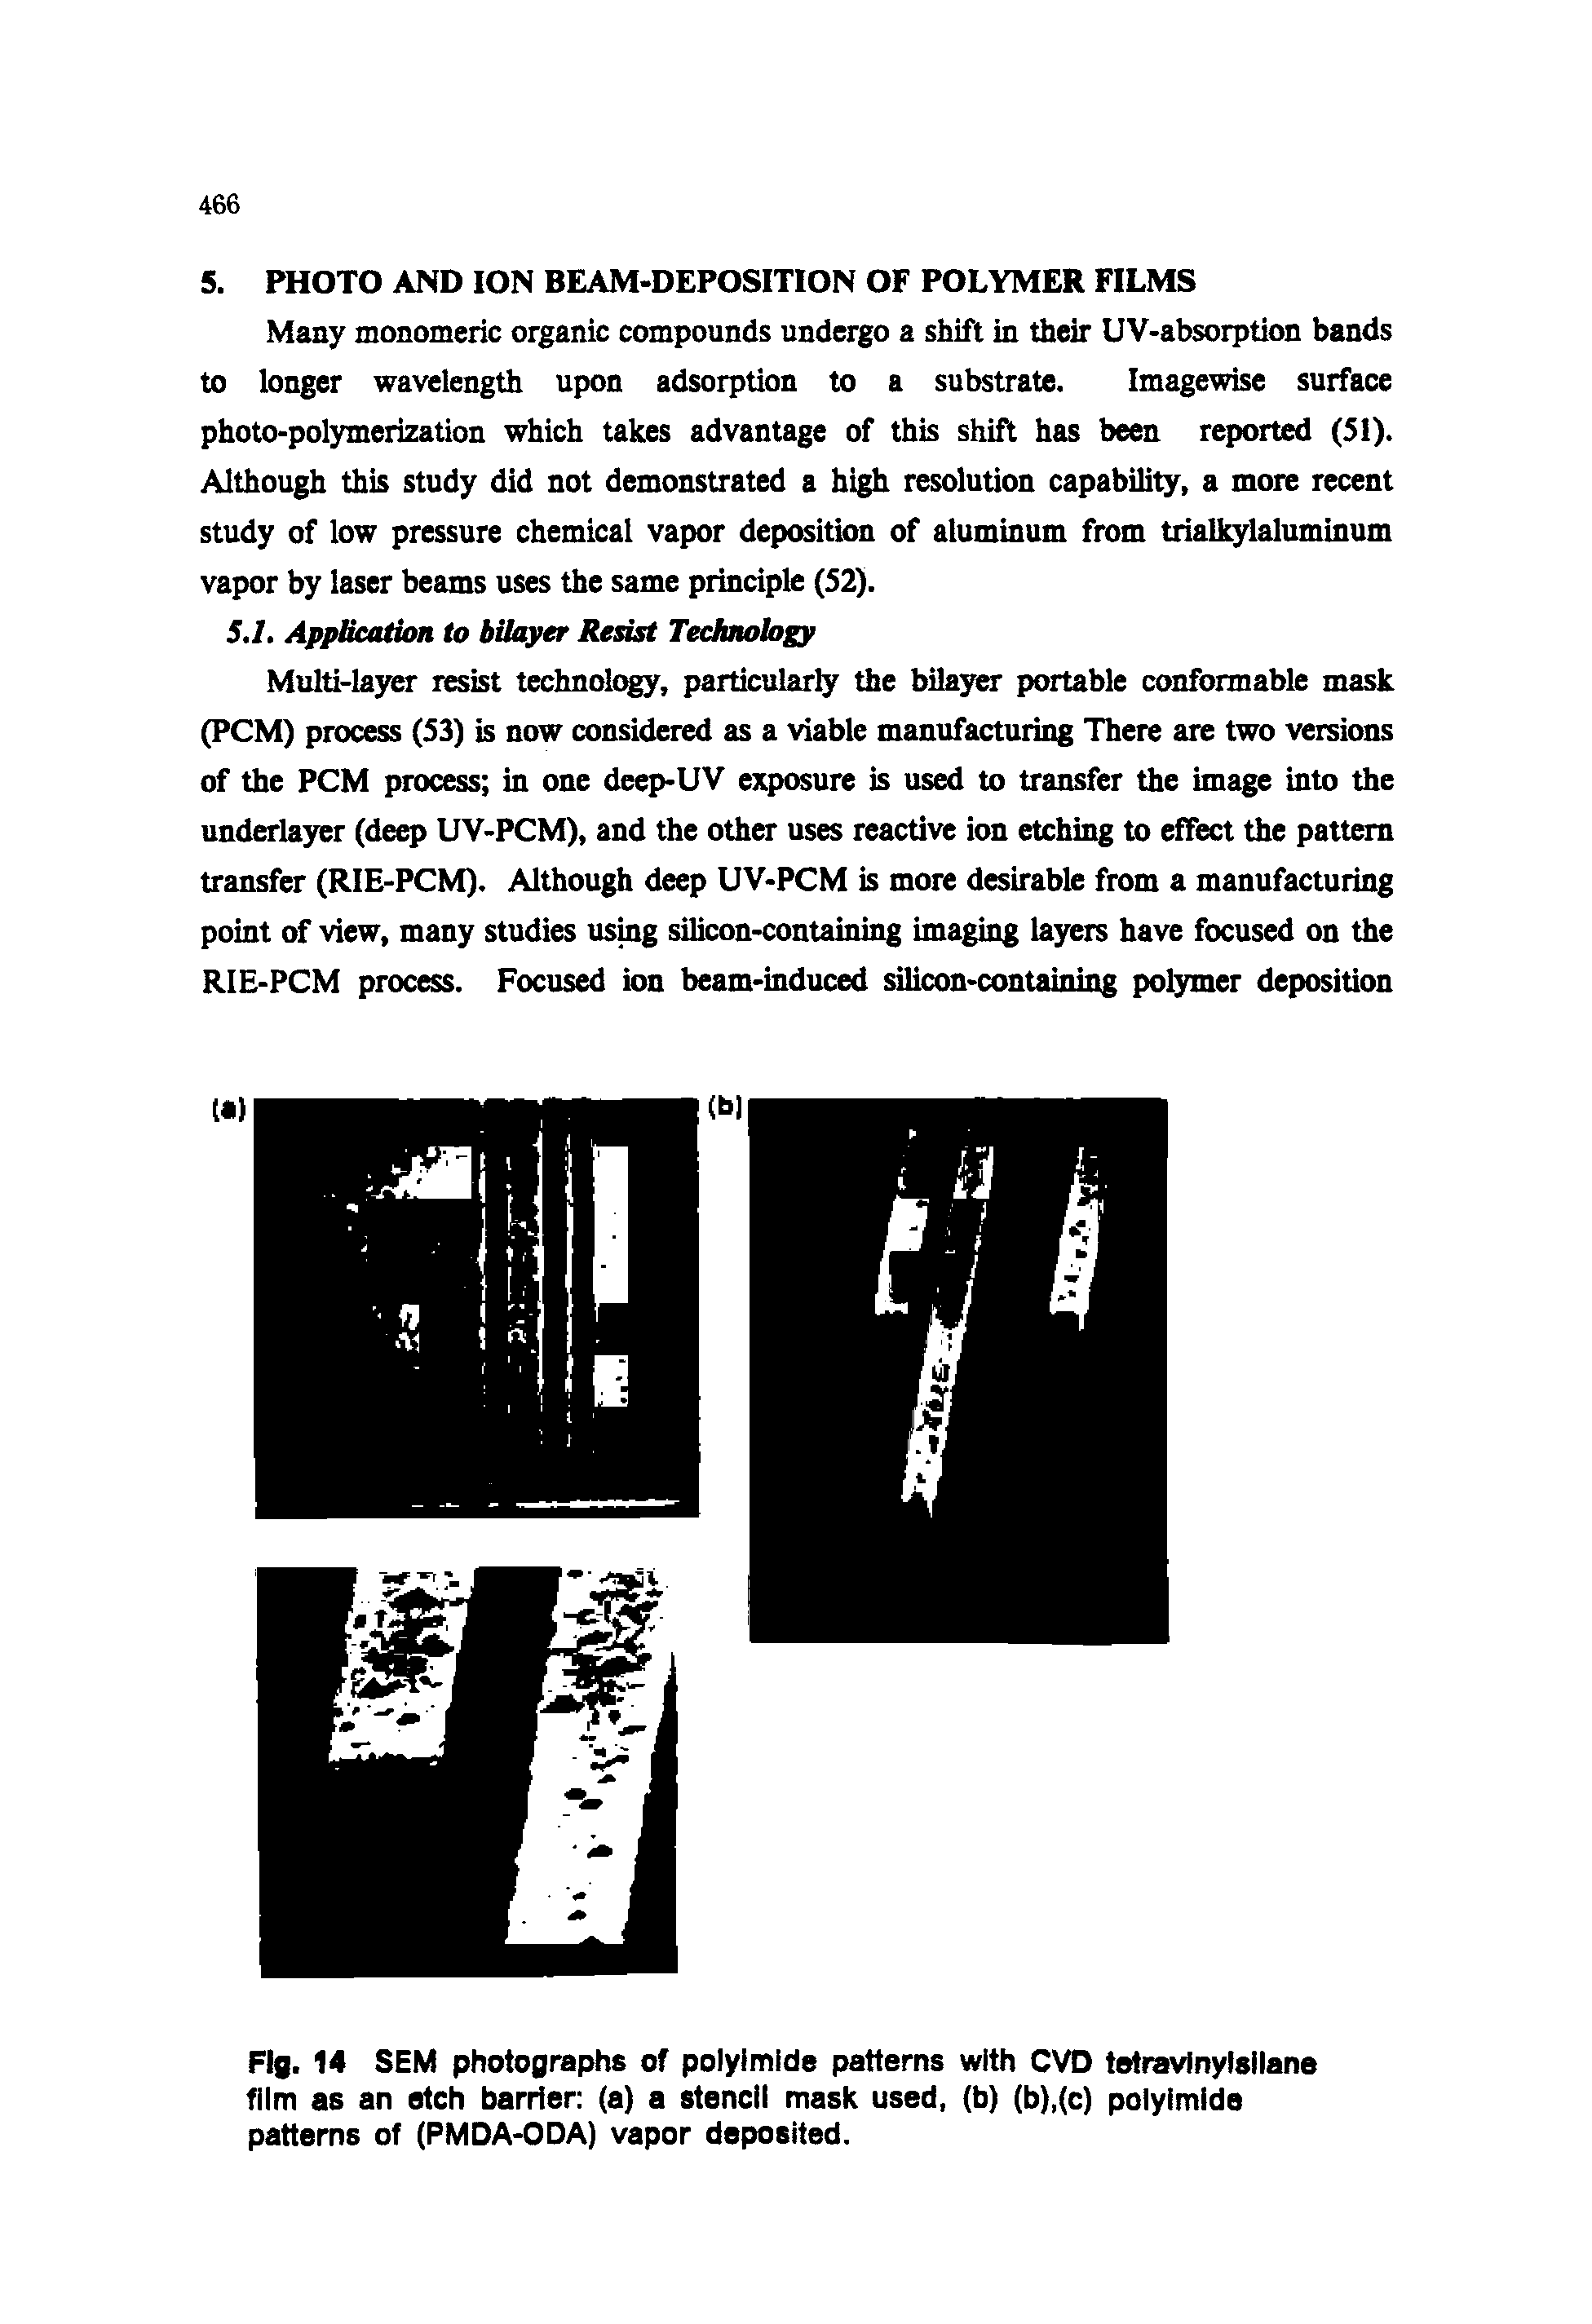 Fig. 14 SEM photographs of polyimide patterns with CVD tetravinylsilane film as an etch barrier (a) a stencil mask used, (b) (b),(c) polyimide patterns of (PMDA-ODA) vapor deposited.